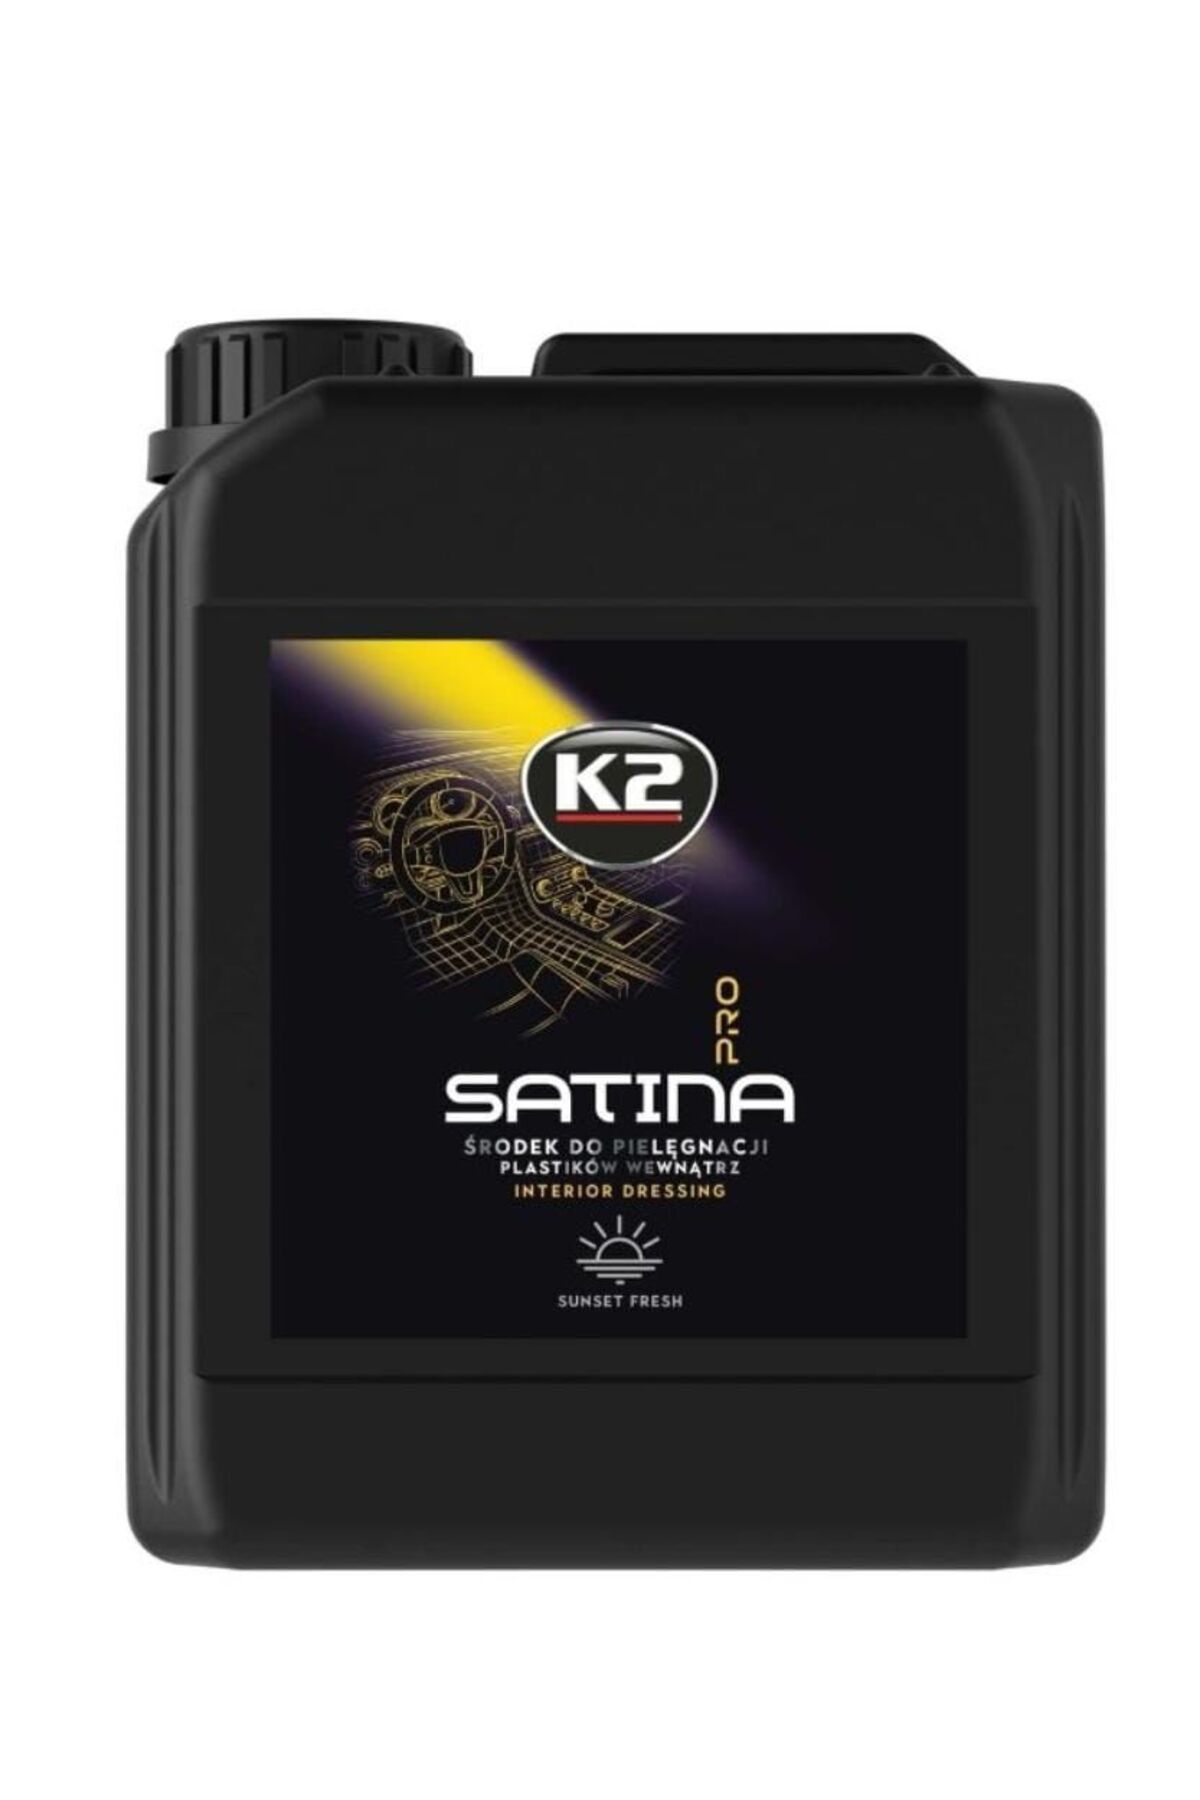 K2 Pro Satina Pro Sunset Fresh 5L iç aksam koruyucu